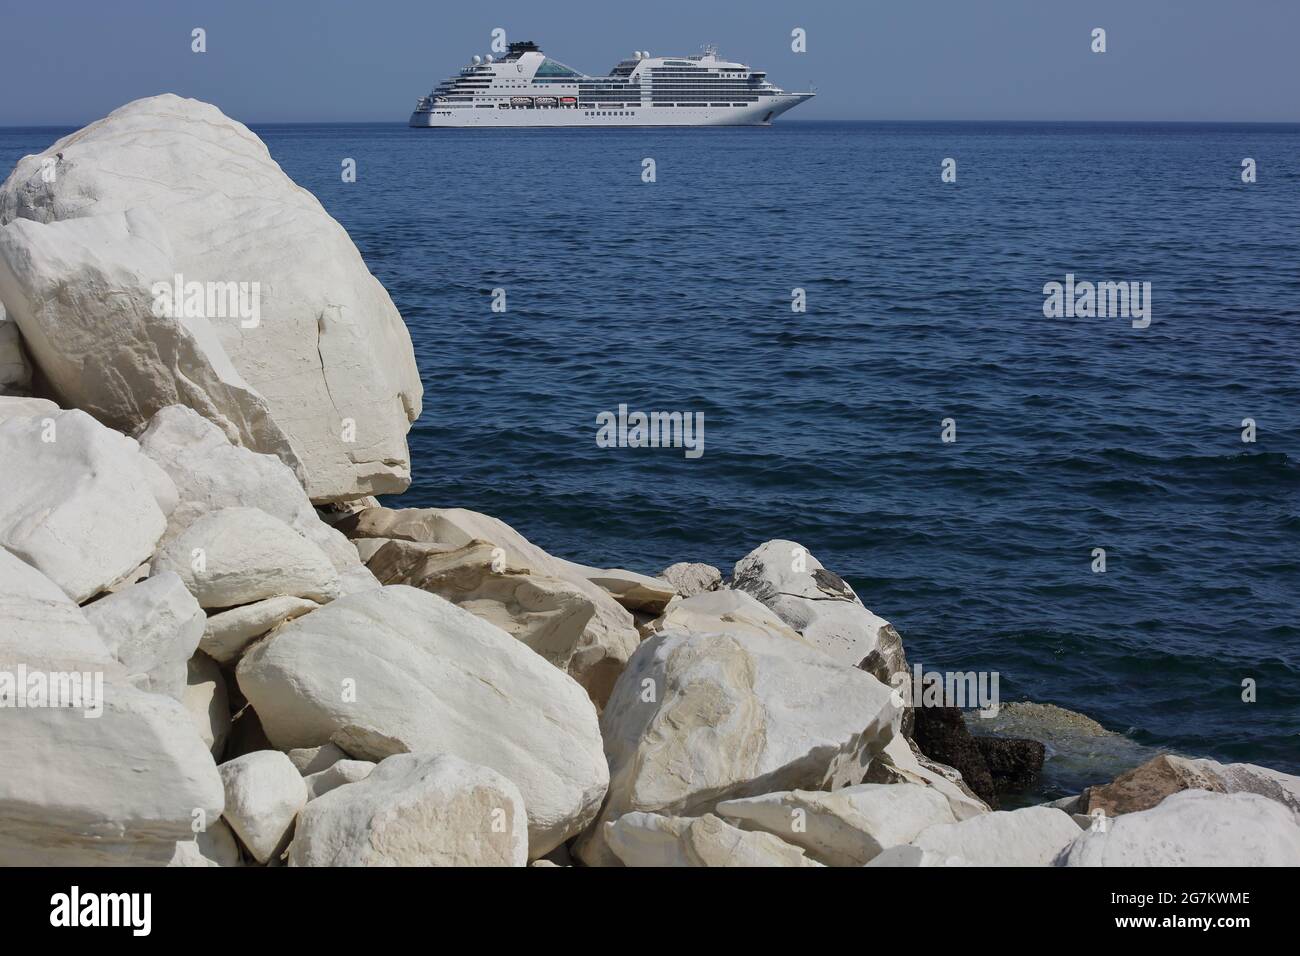 Luxury cruise boat on the Mediterranean sea seen on horizon, rocky coast in foreground Stock Photo